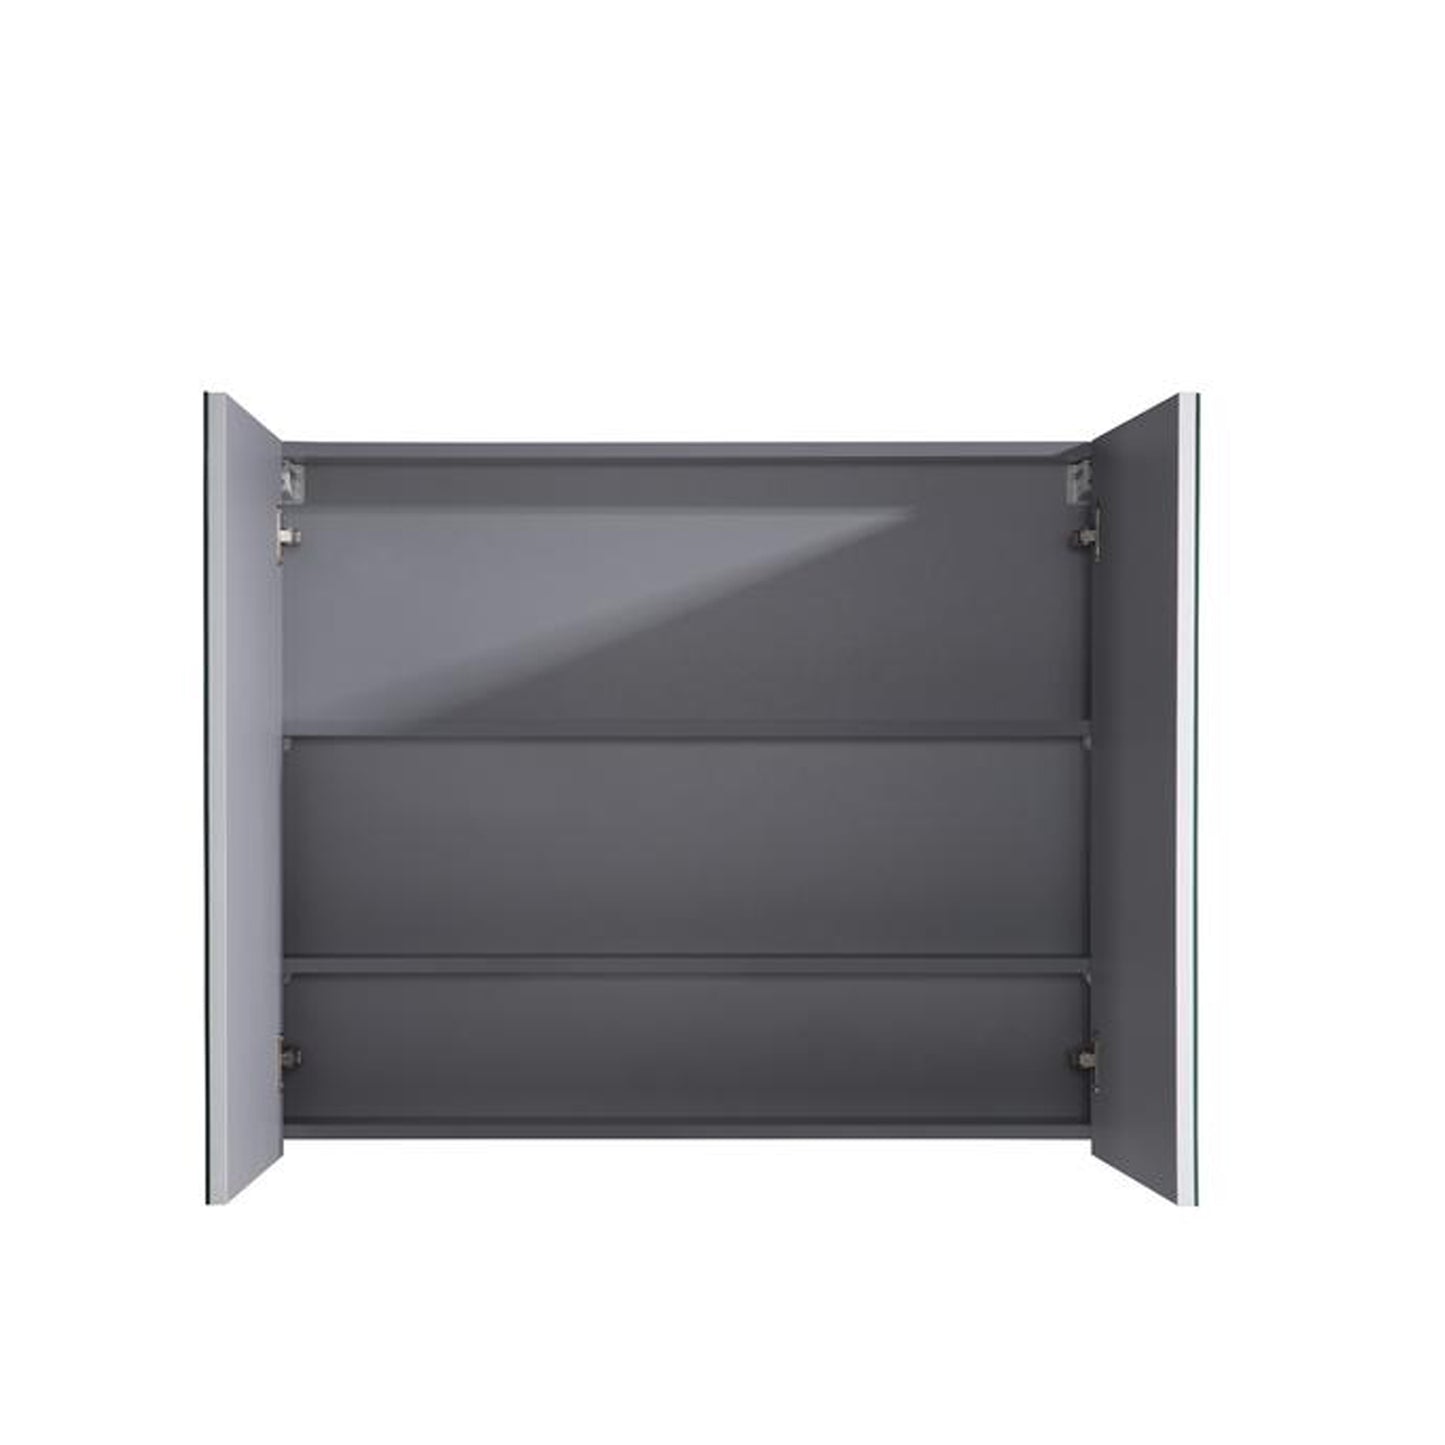 MELA - PORTER 900 Gloss White Mirror Cabinet with Doors